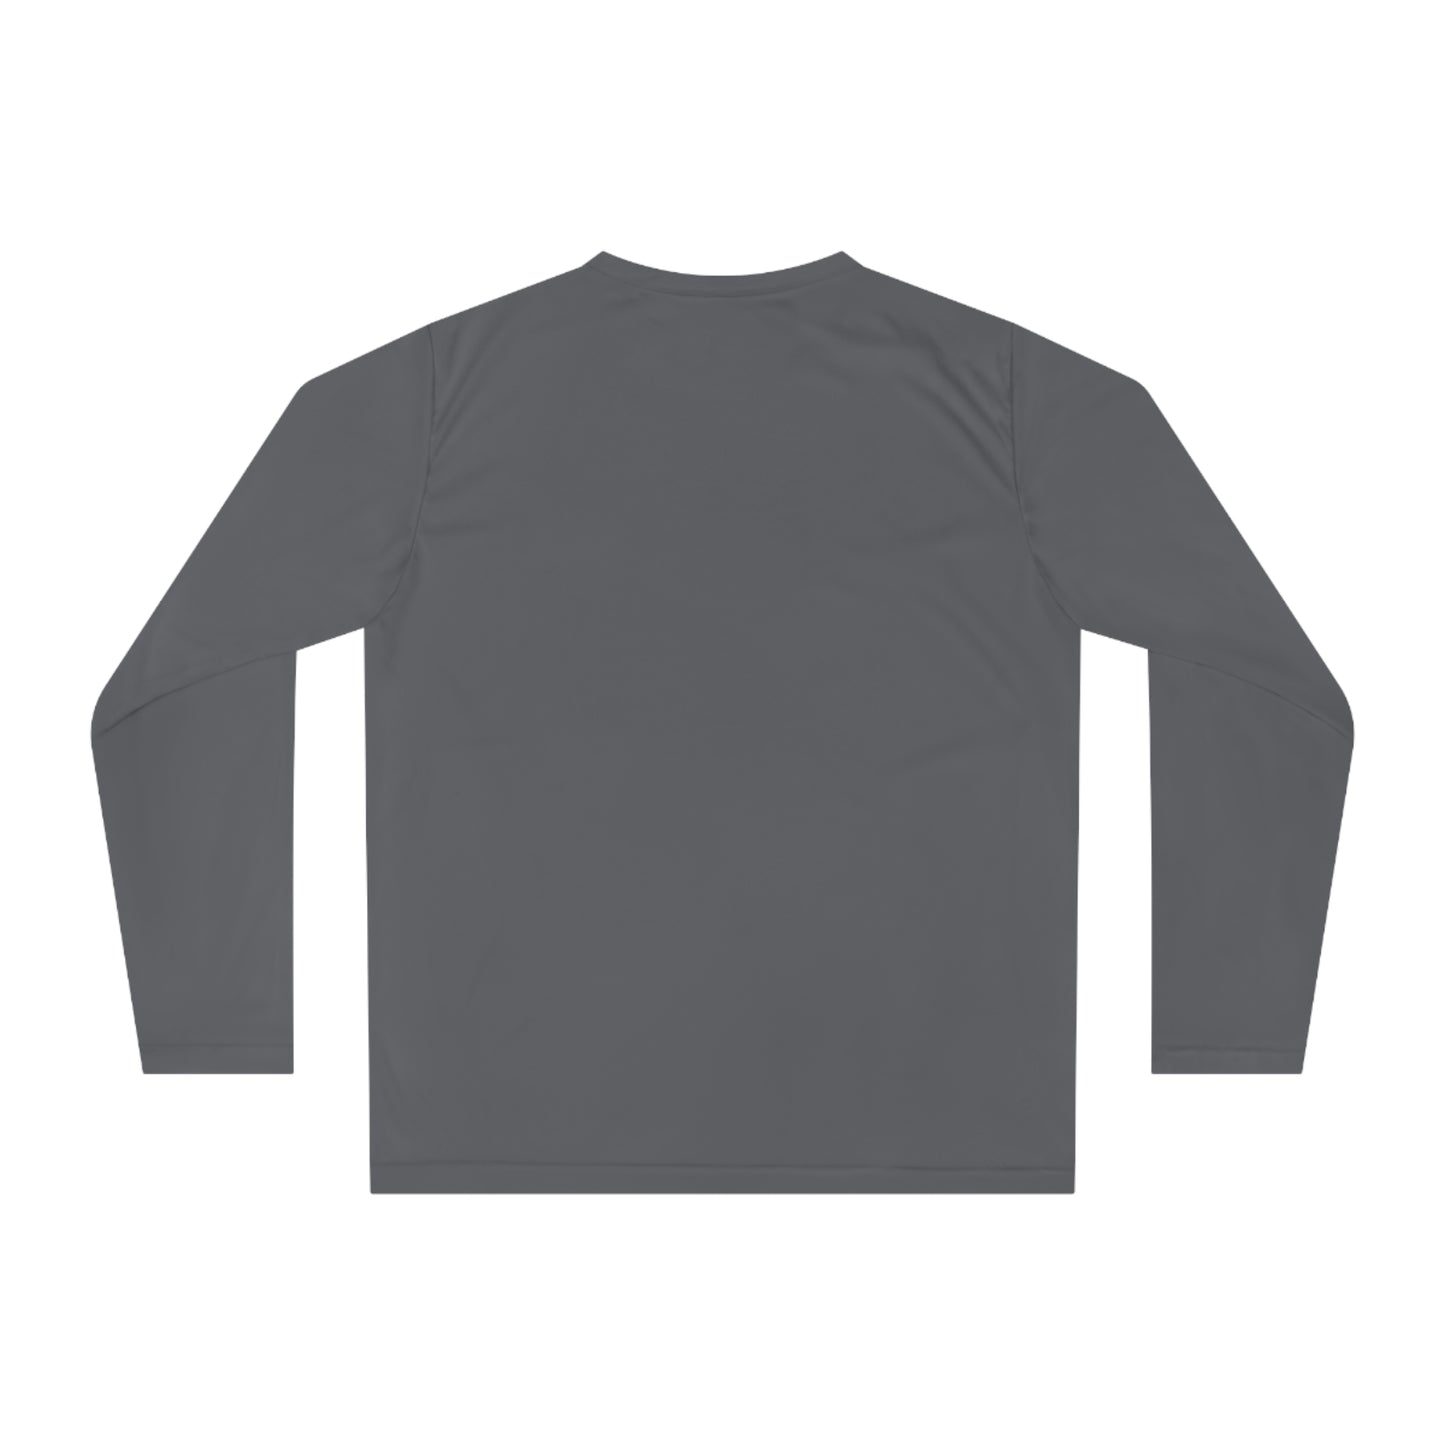 Brooklyn Tech Classic Logo - Men's Performance Long Sleeve Shirt